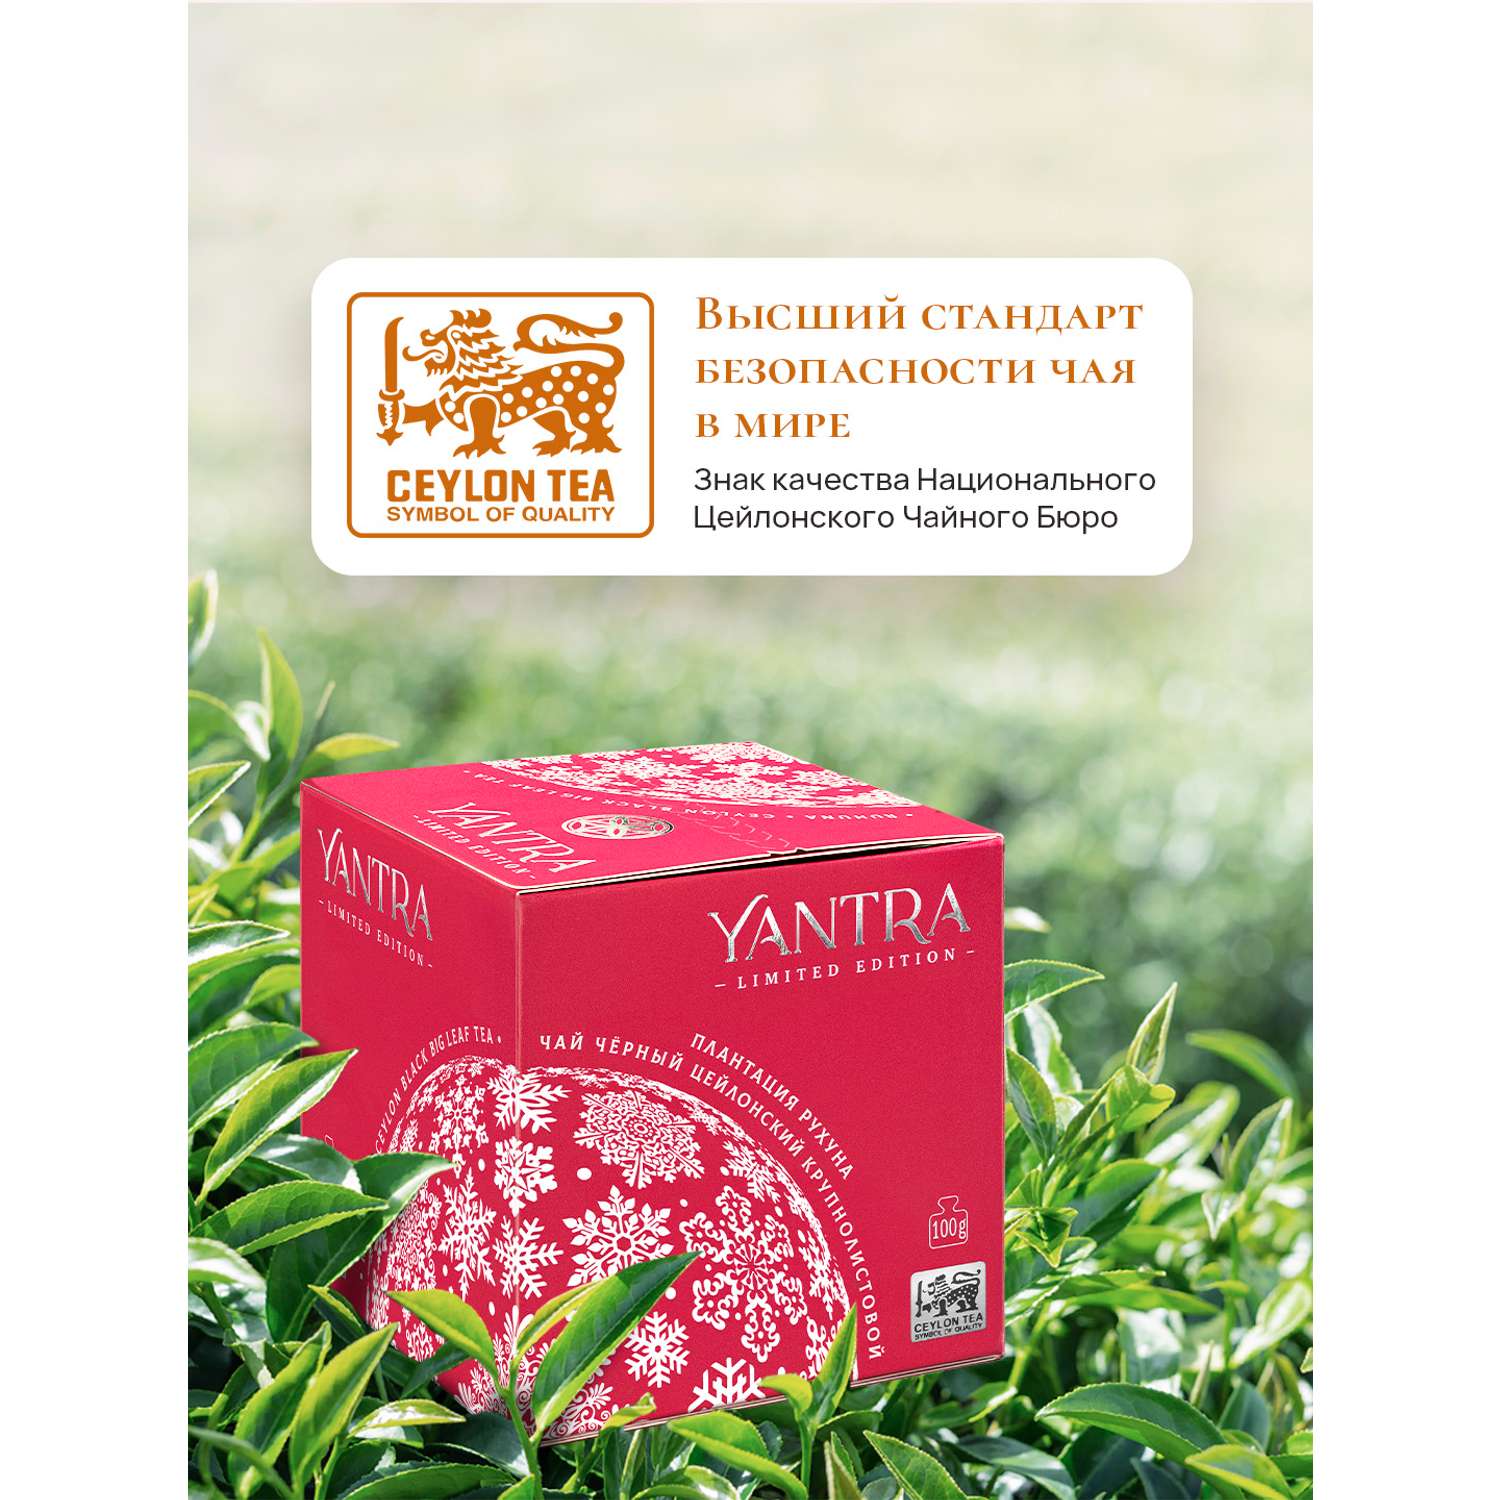 Чай Limited Edition Yantra чёрный крупнолистовой стандарт OPA 100 г - фото 3